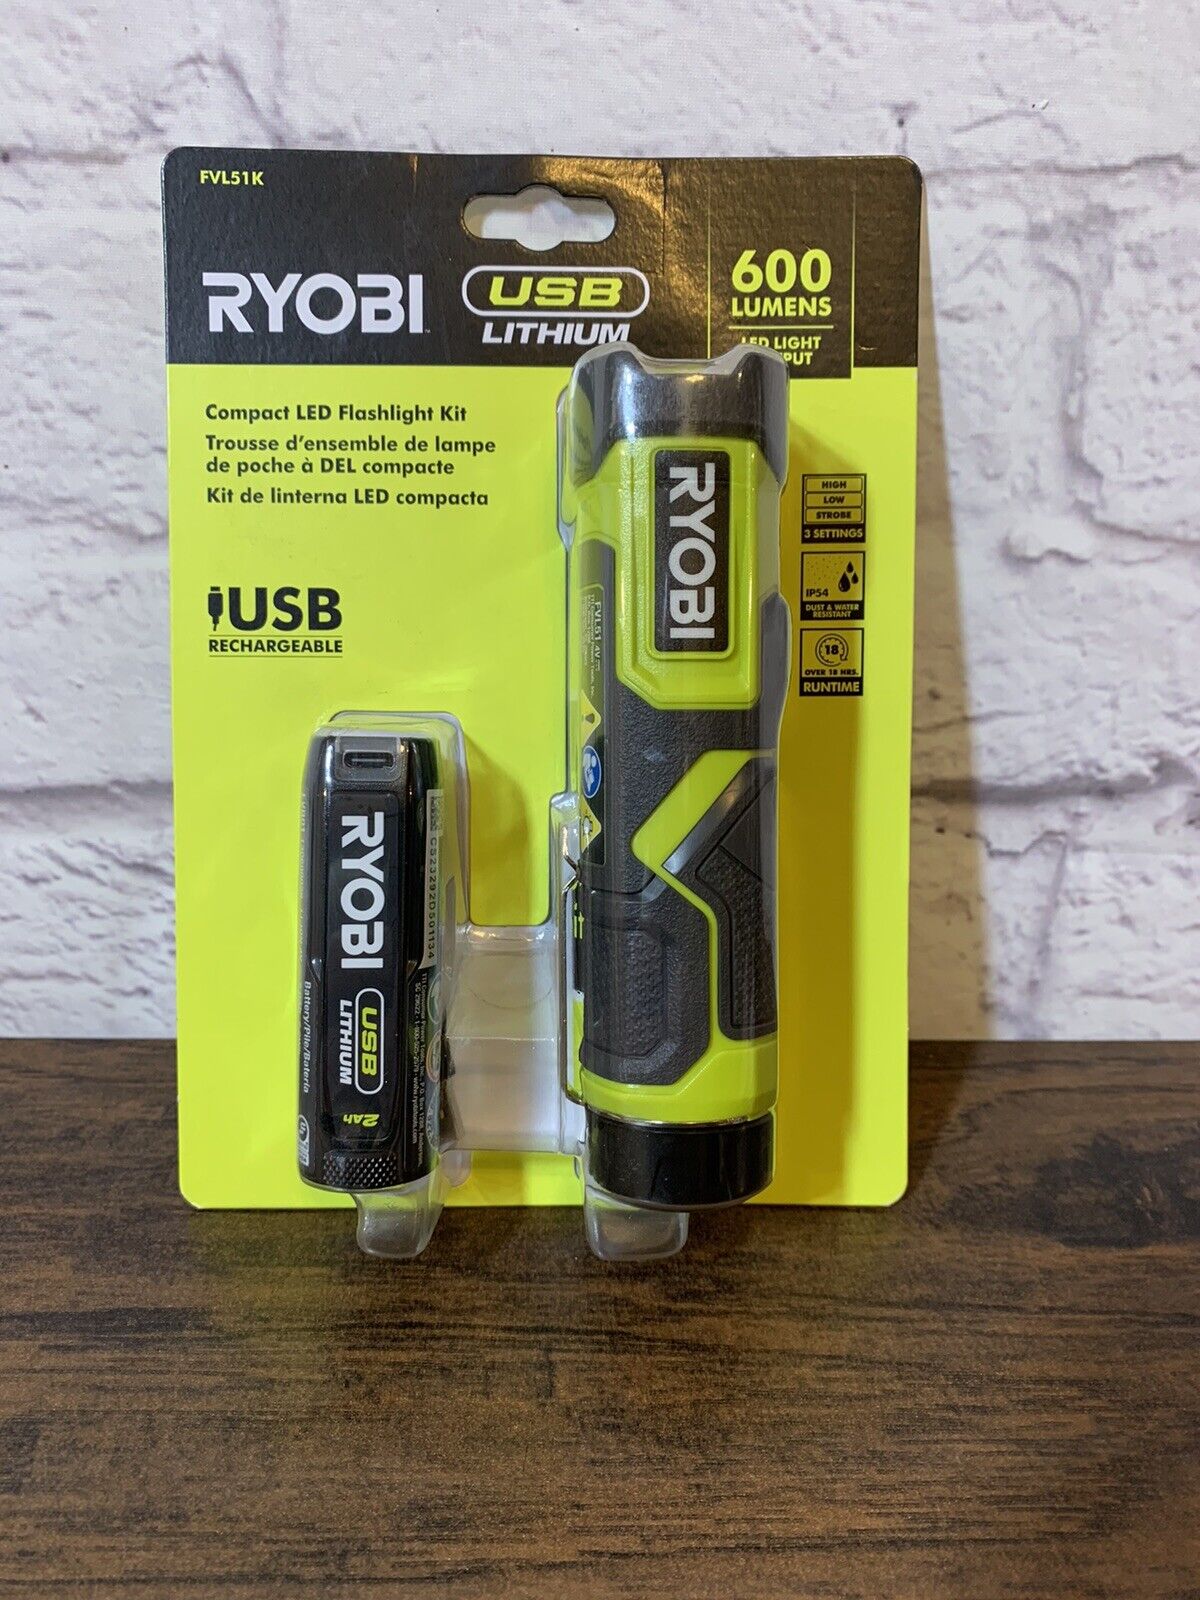 Ryobi 600 Lumens USB Lithium Compact Flashlight Kit FVL51K New